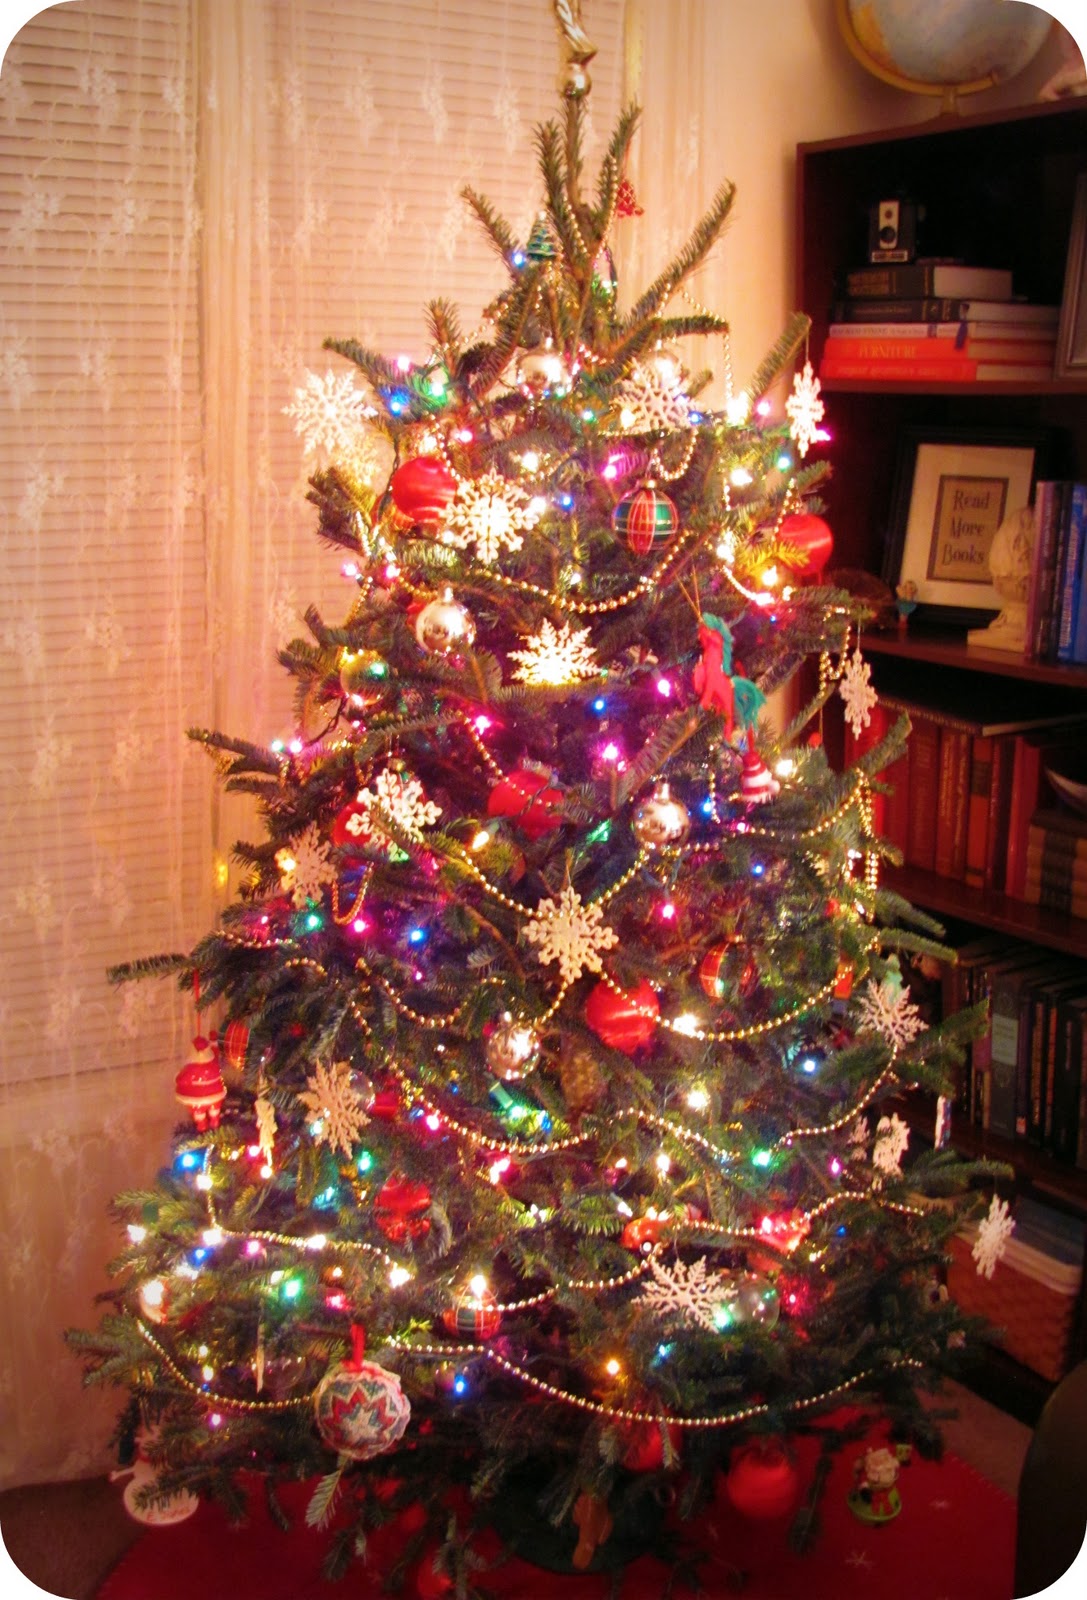 oldchristmas-tree